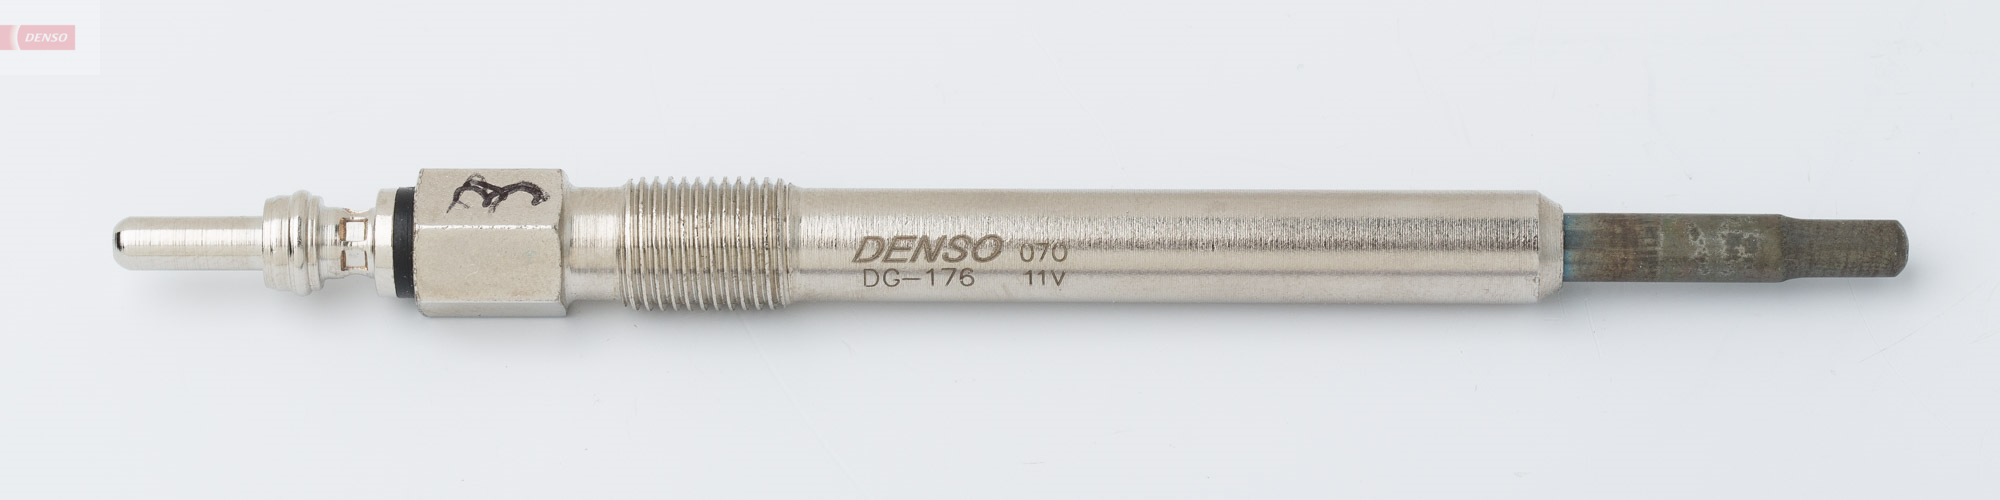 Свеча накаливания   DG-176   DENSO